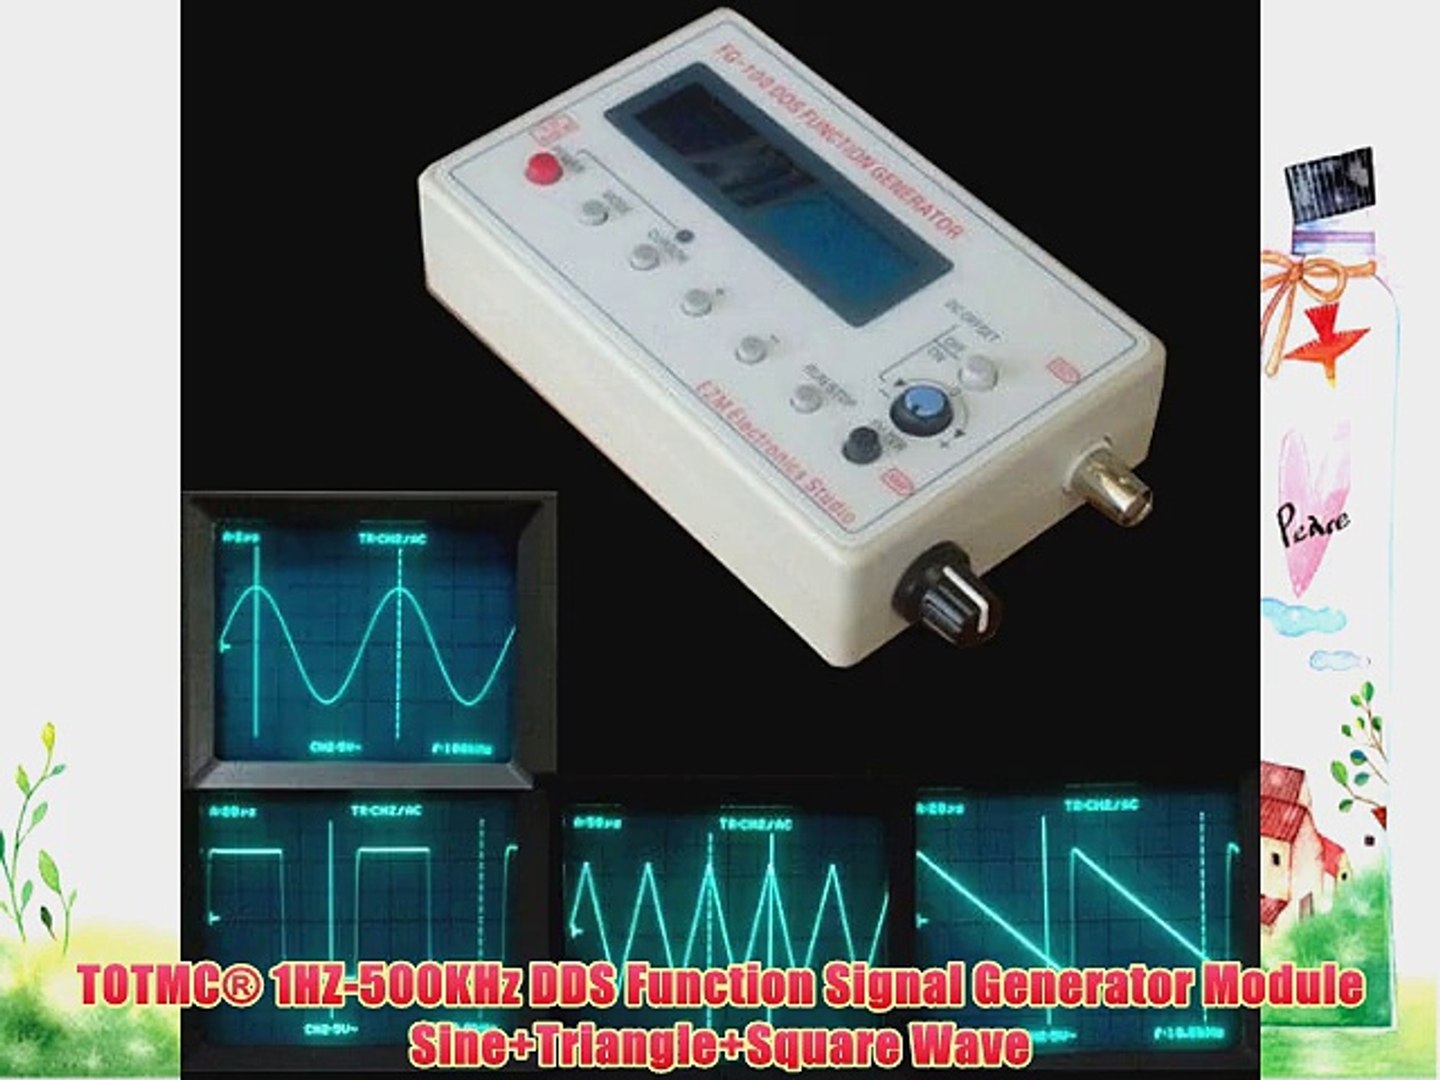 DDS Funktion Signal Generator Sine+Triangle Frequenz Frequency 1HZ-500KHz BAF 